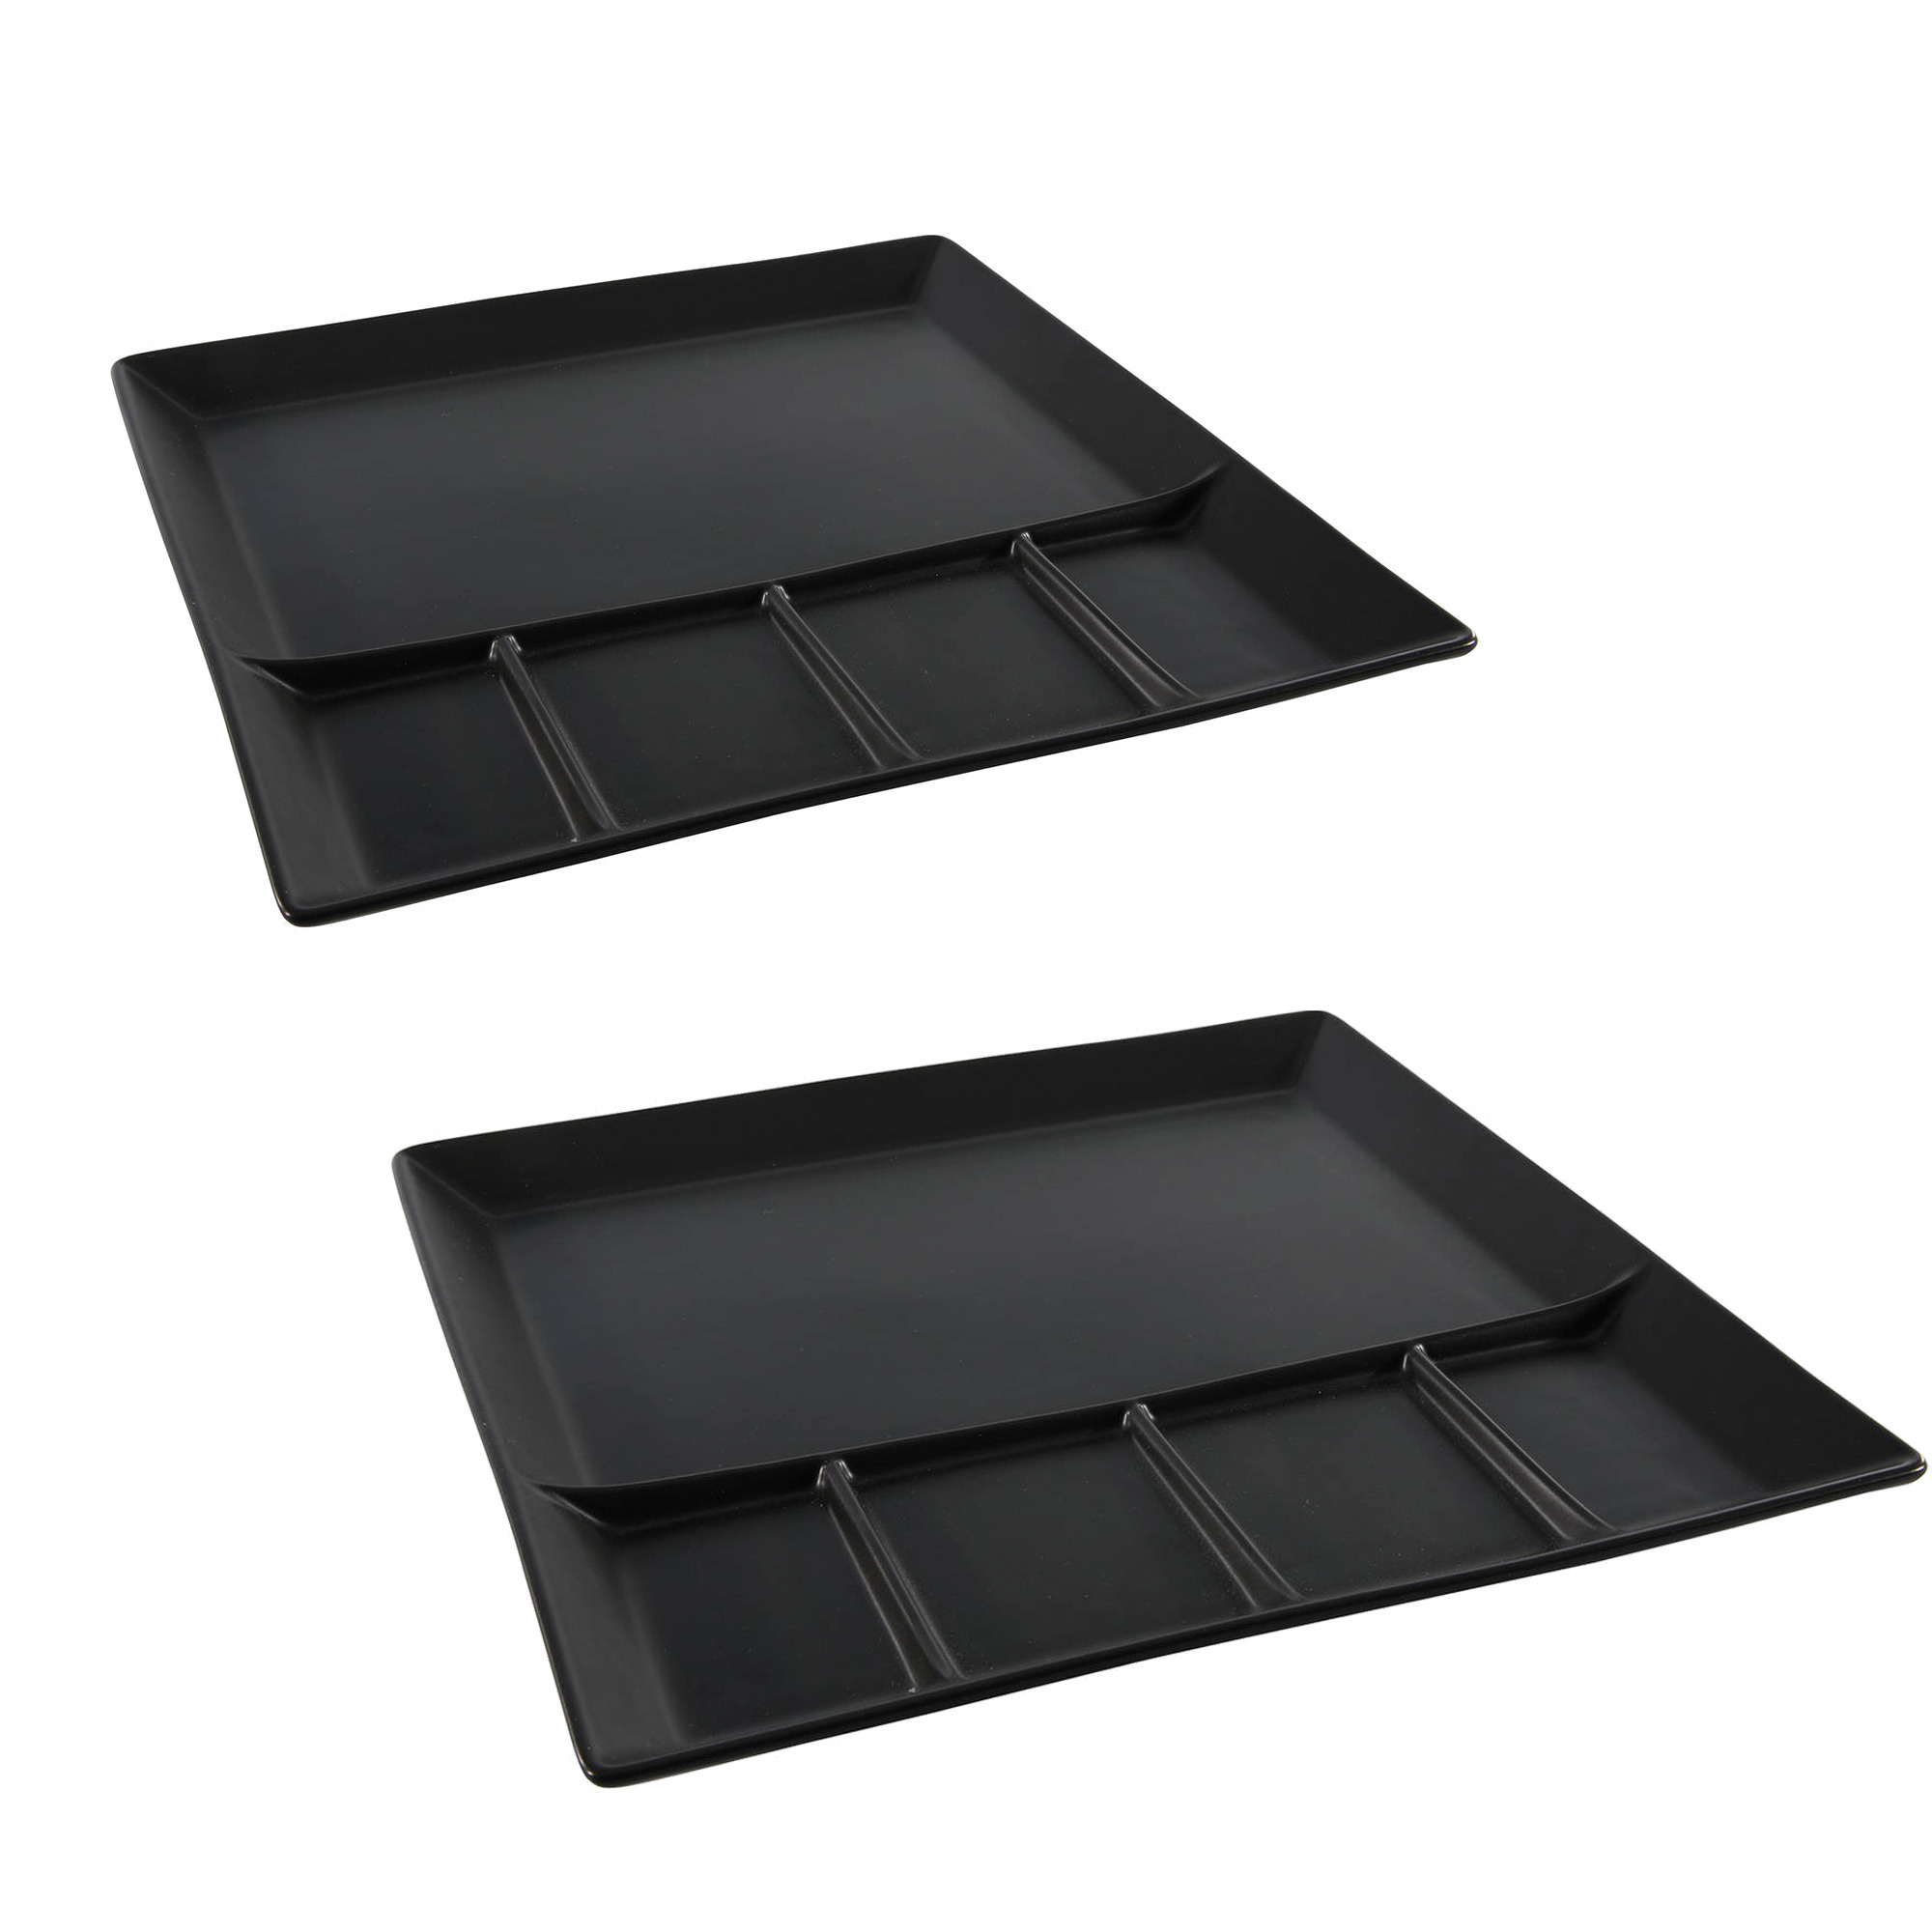 8x stuks mat zwart fondue-gourmet bord 5-vaks vierkant aardewerk 24 cm